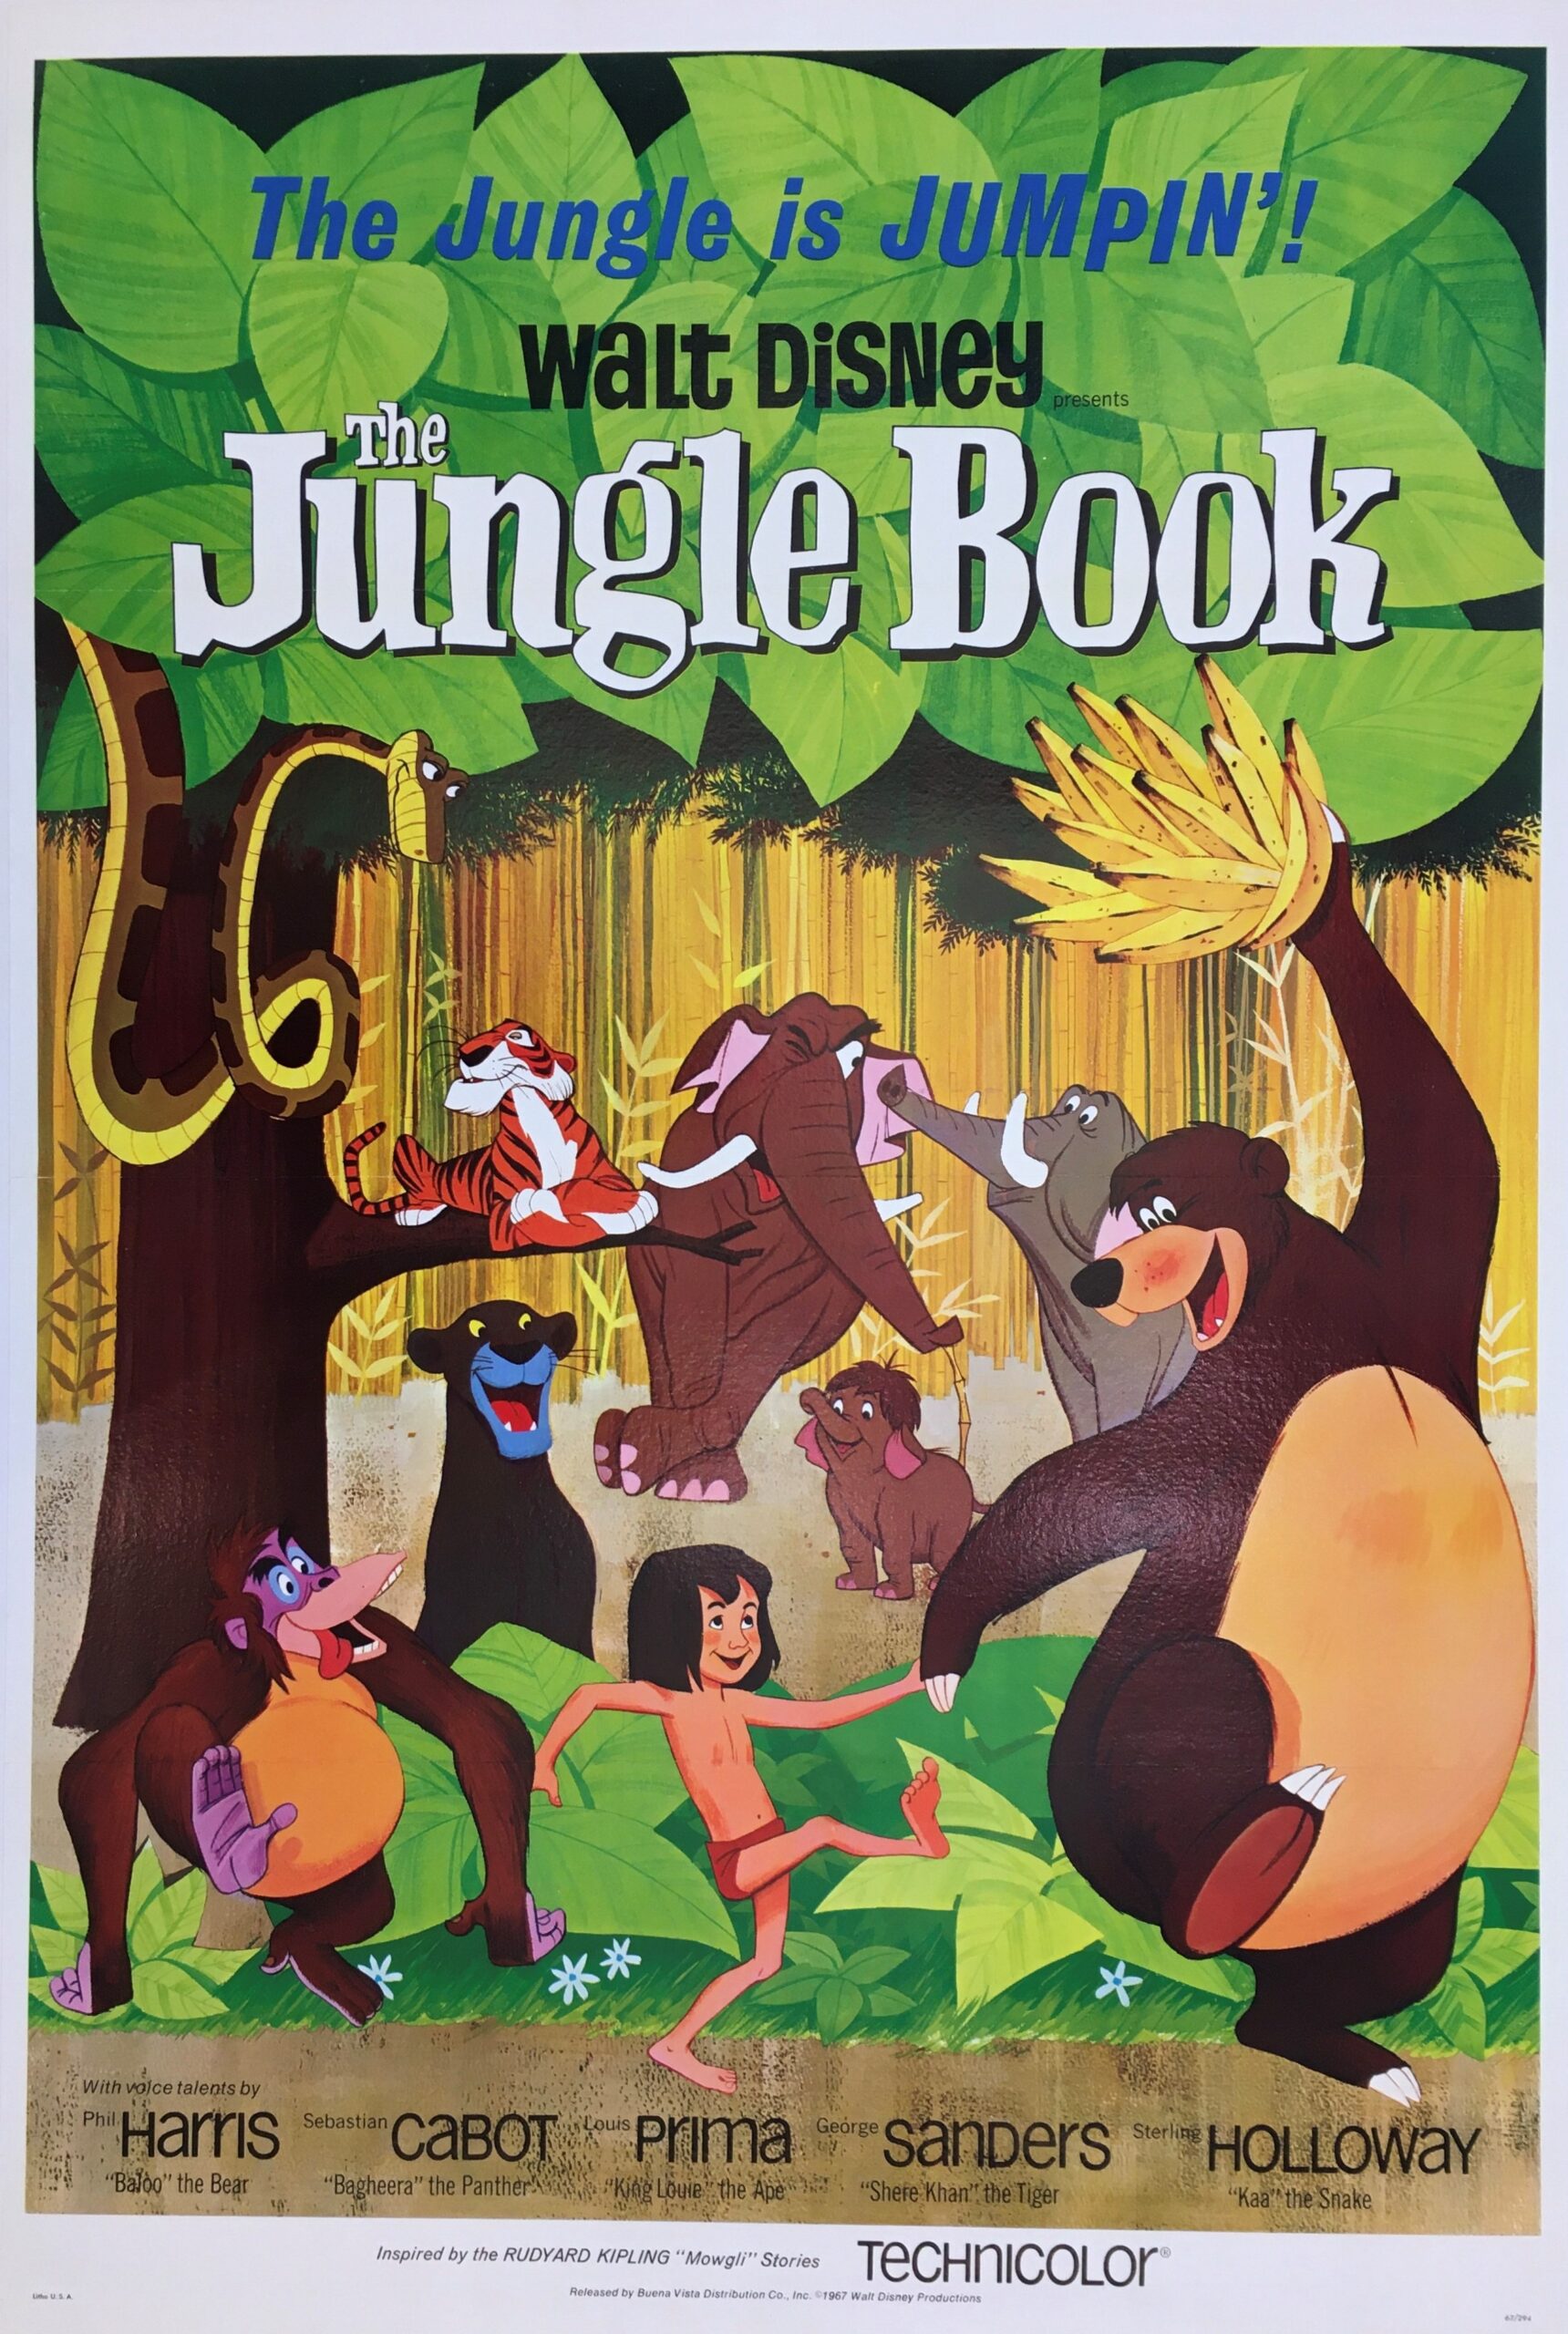 Original vintage cinema movie poster for Disney classic, The Jungle Book